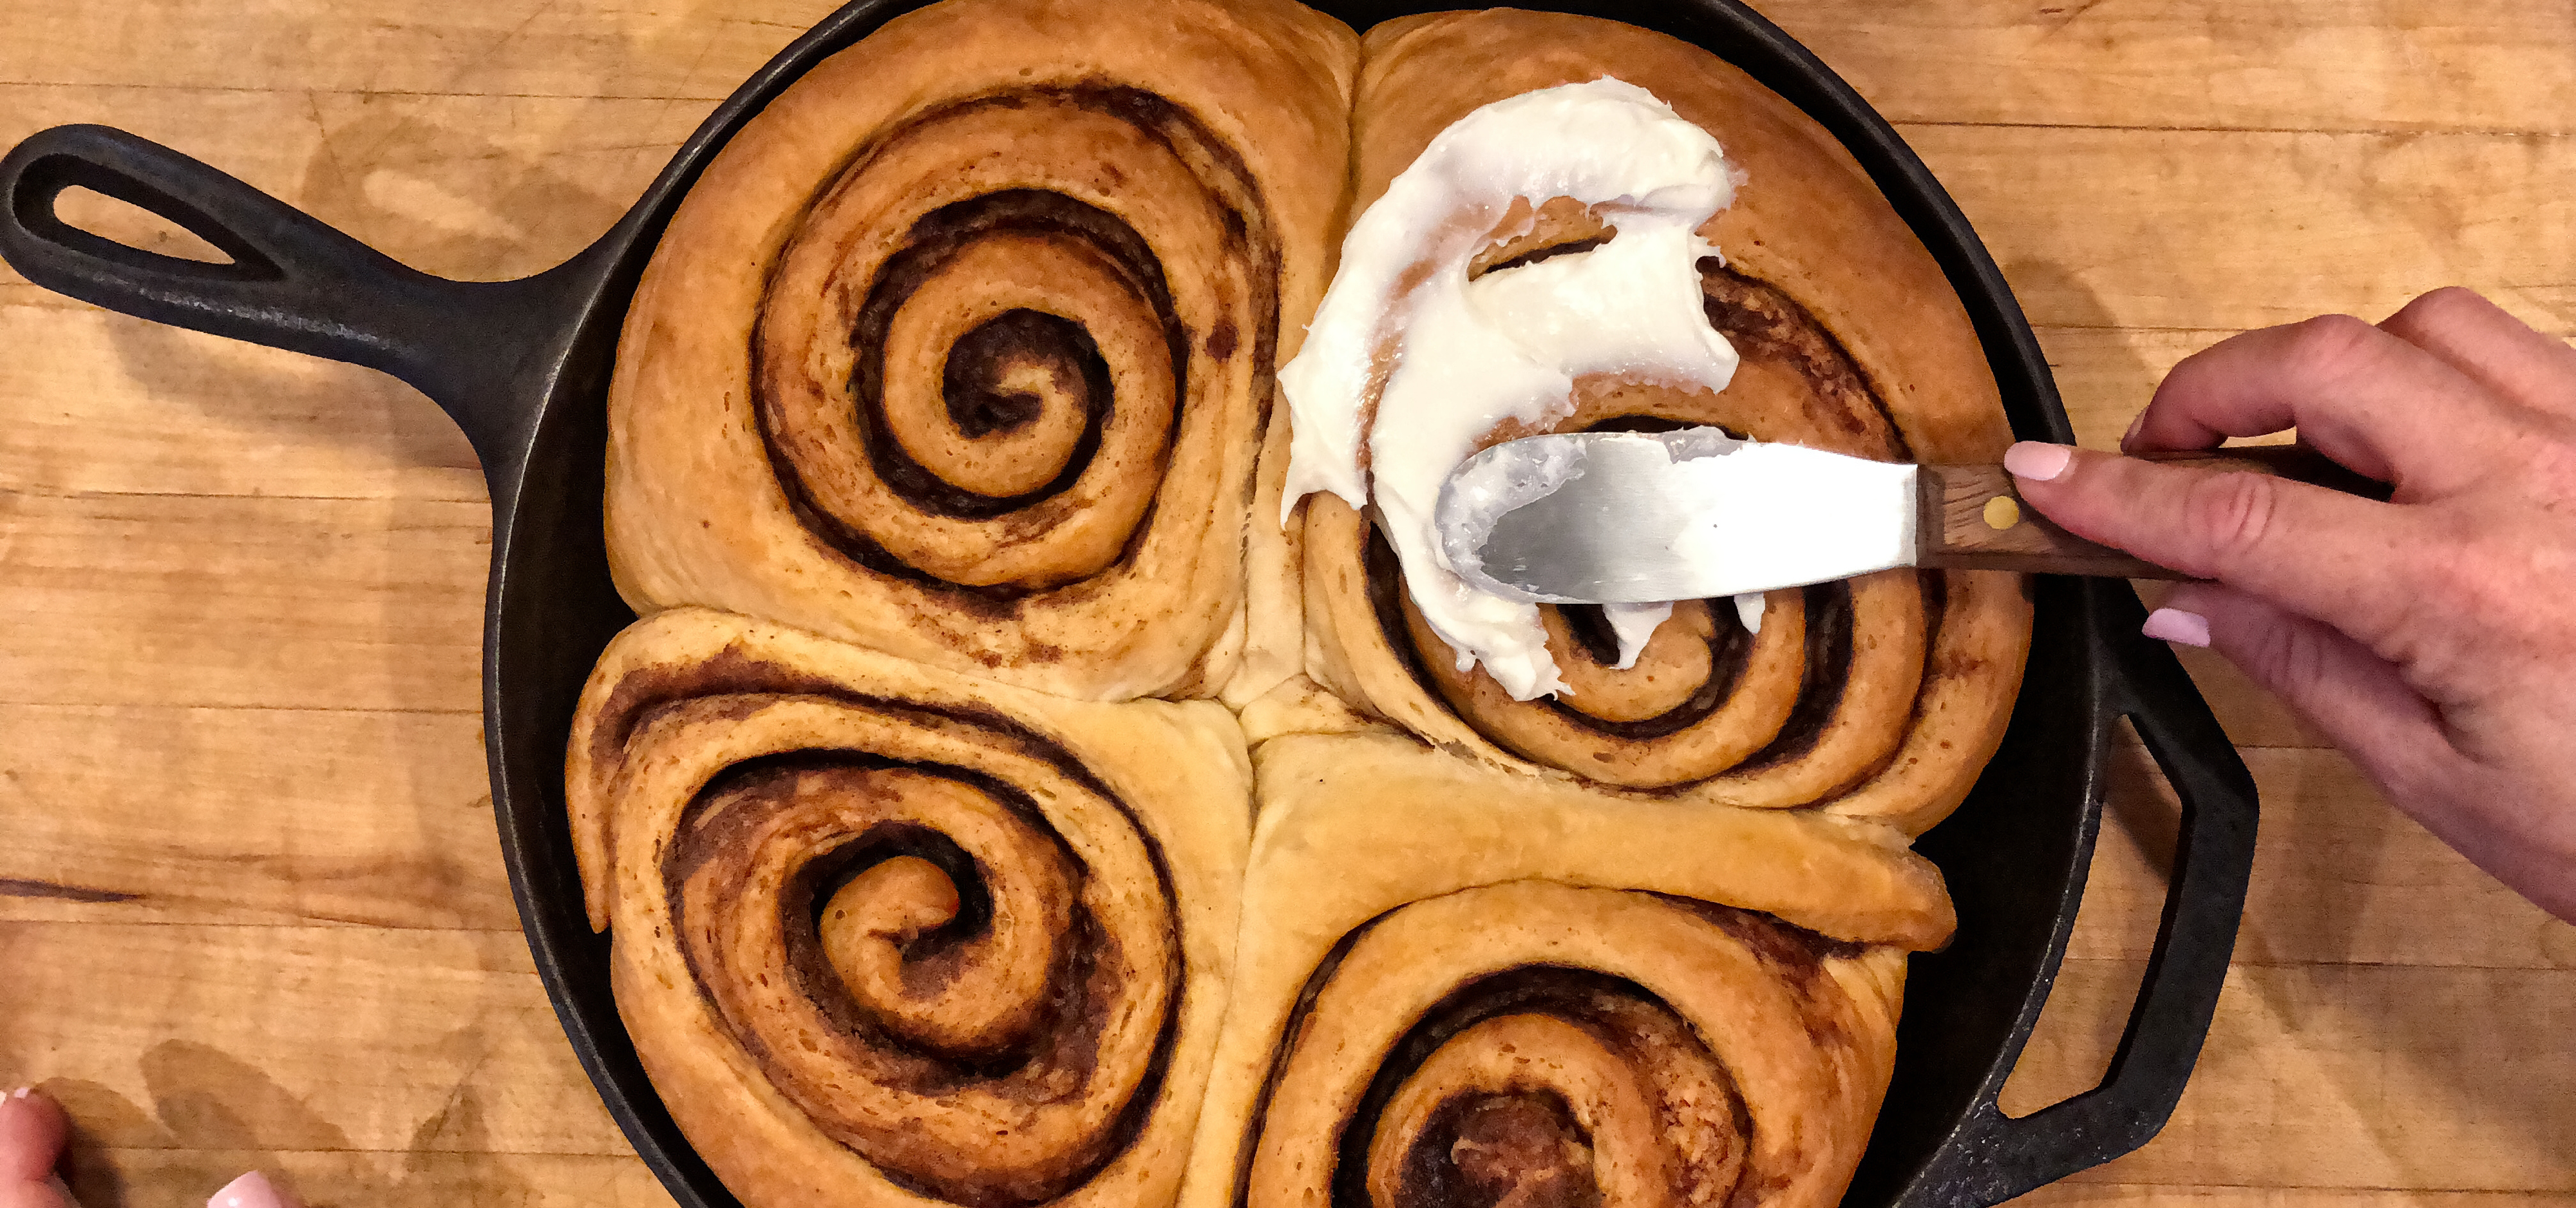 bake-the-cinnamon-rolls